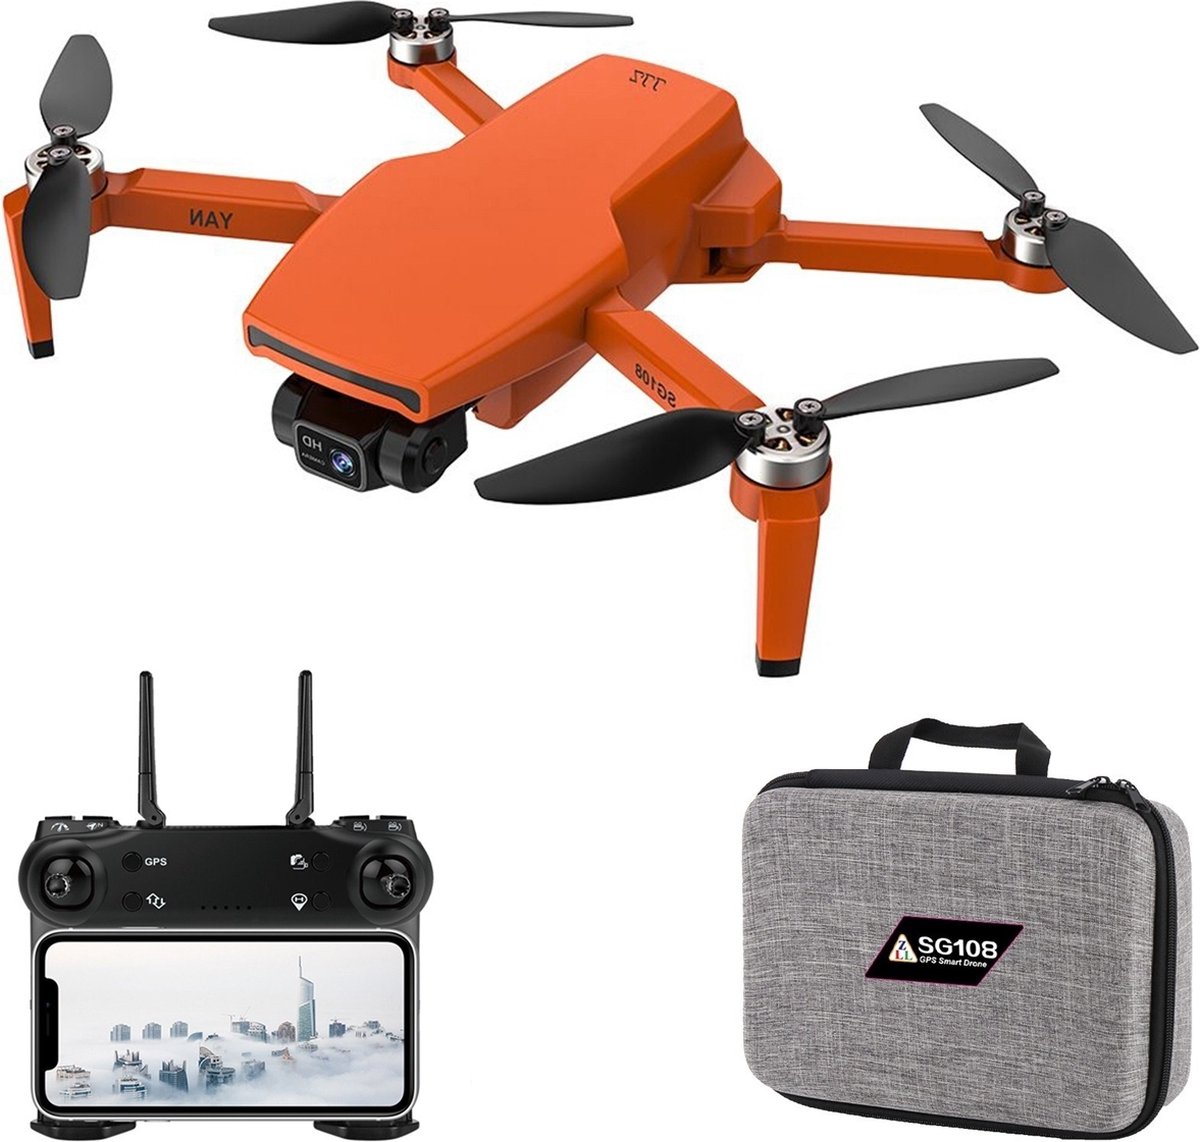 SG108 Brushless Drone 4k HD 5G WiFi Drone Met HD Camera - Inclusief Opbergtas